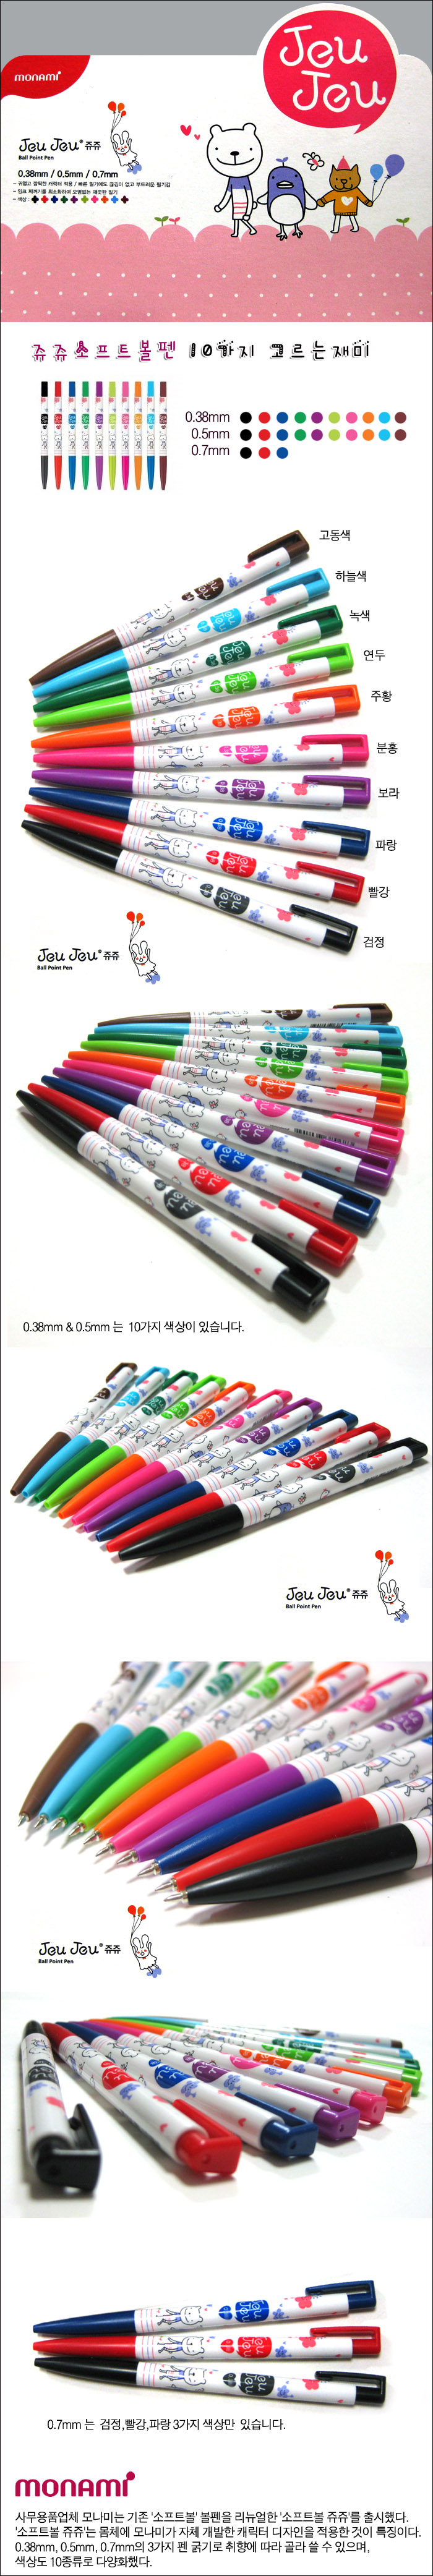 New / monami / Jeu Jeu Soft Ballpoint Pen / 0.38mm/0.5mm/0.7mm/10 different colors / Jeu Jeu / Softball